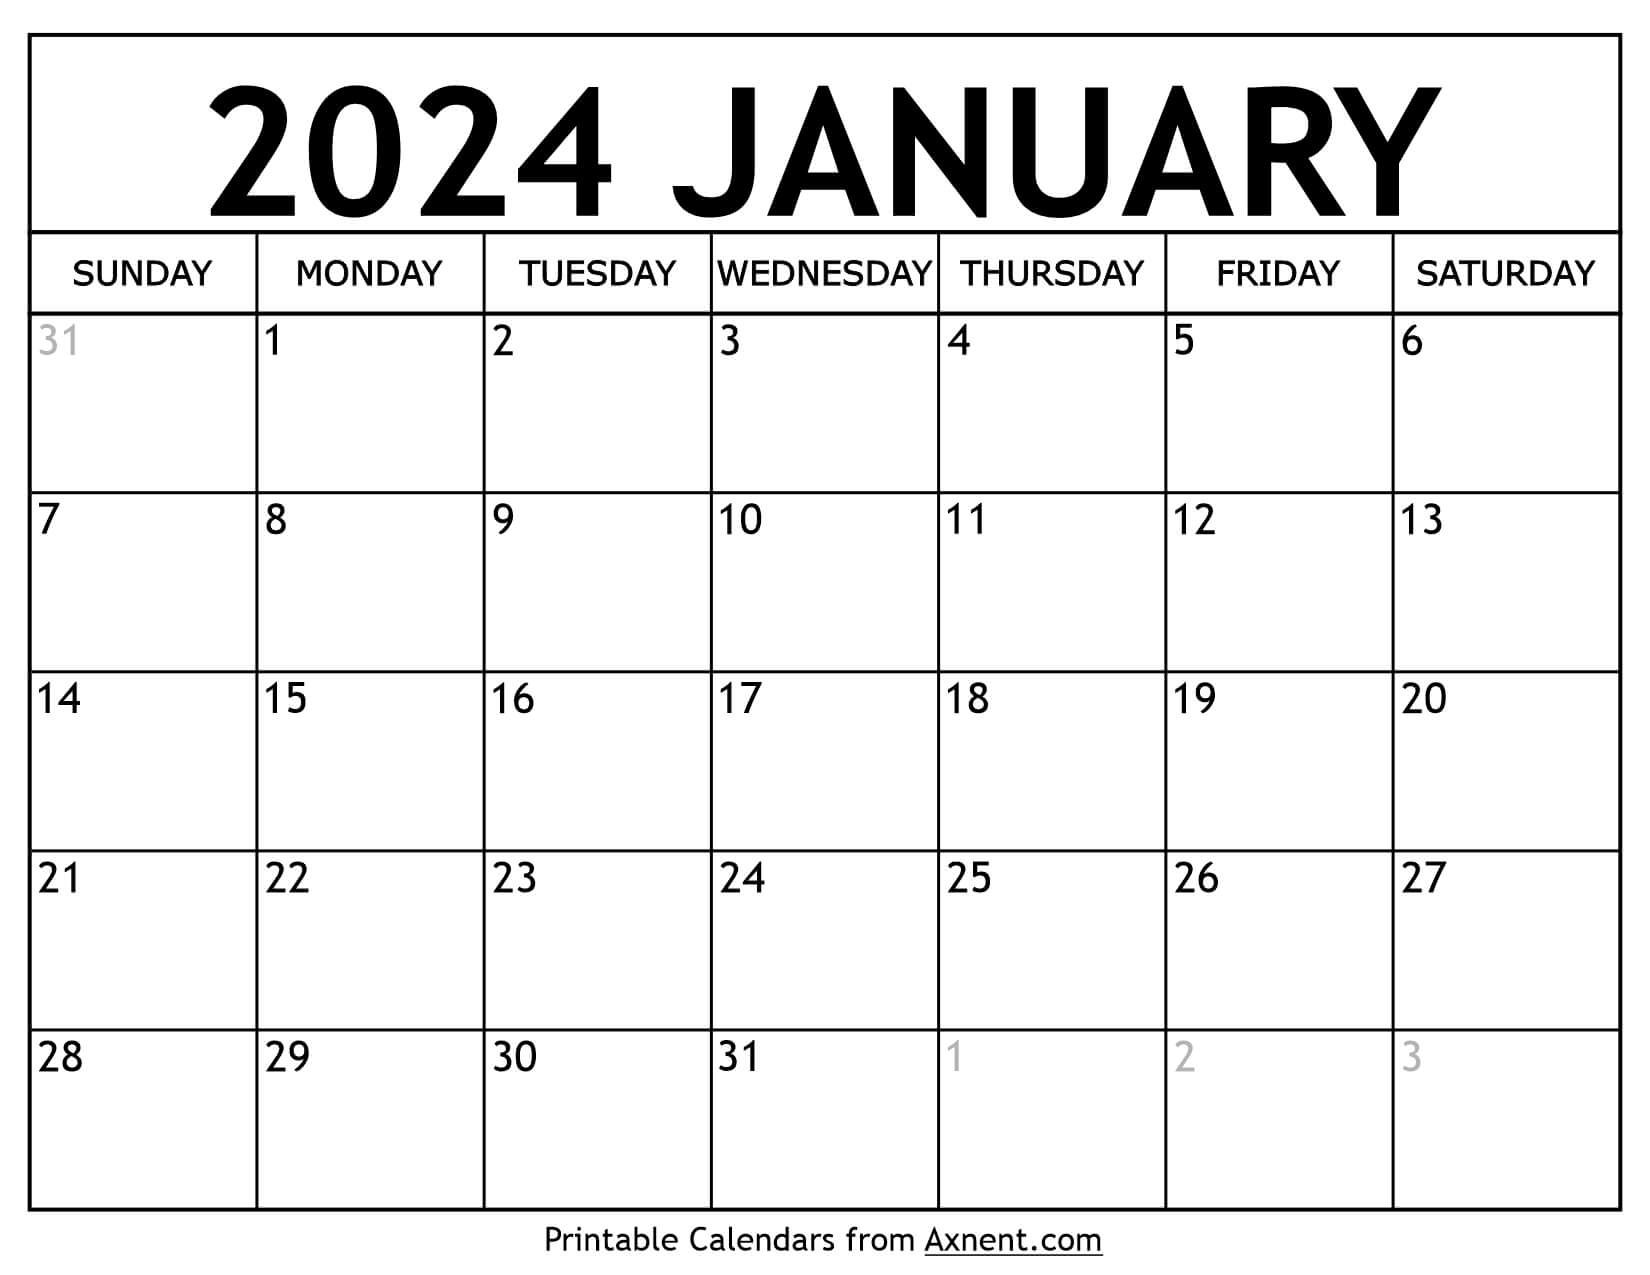 Printable January 2024 Calendar Template - Print Now for Monthly Calendar January 2024 Printable